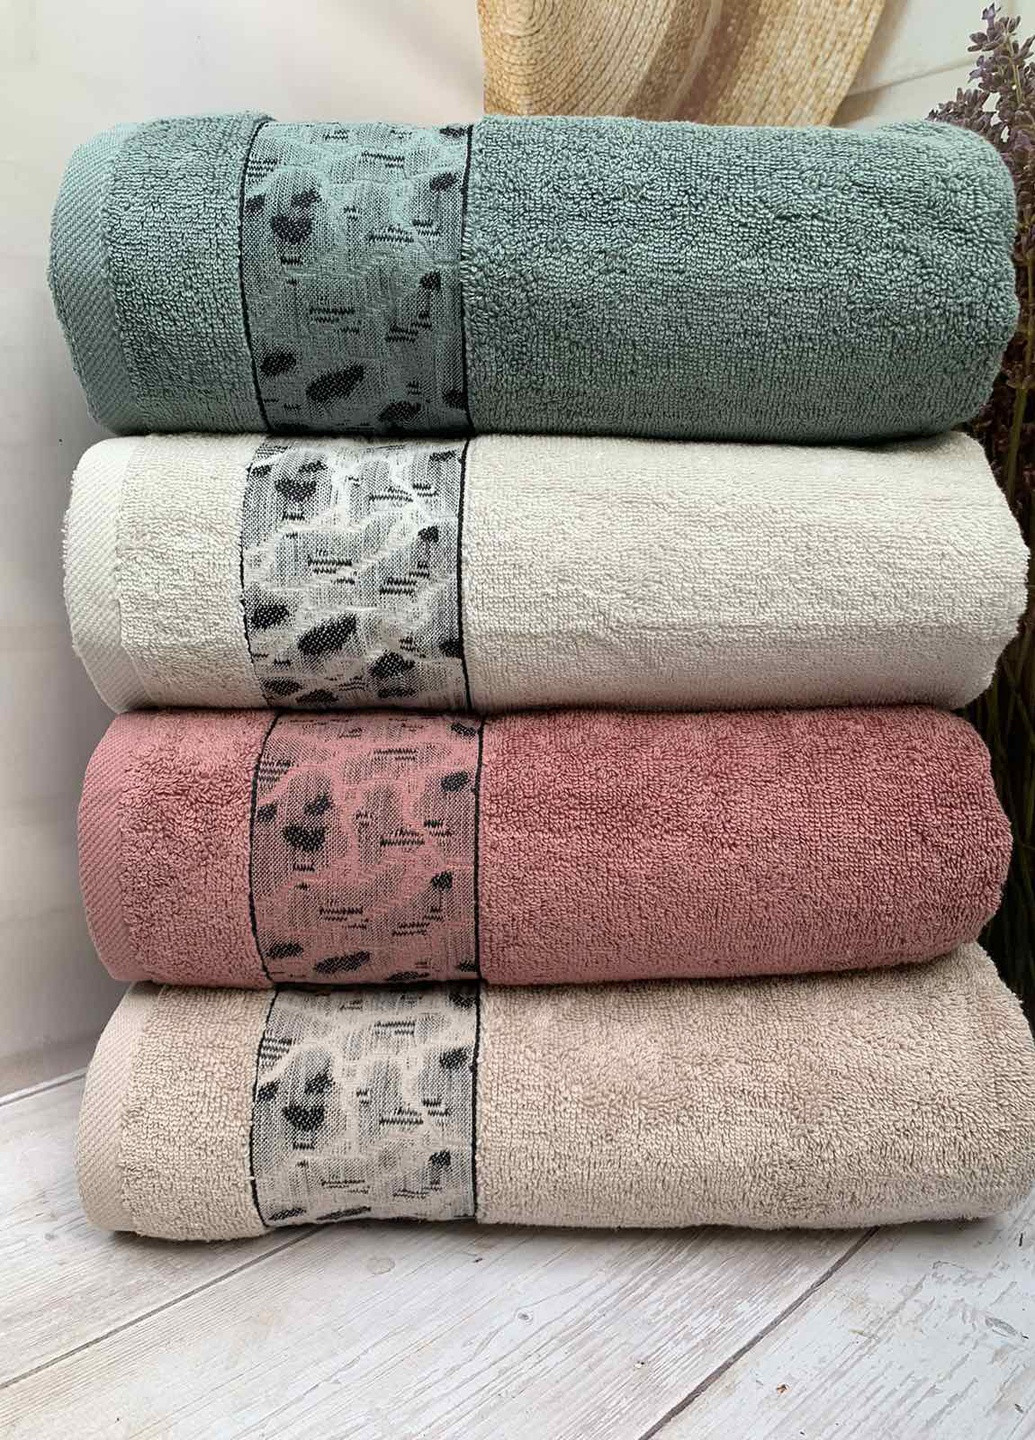 Sikel набор жаккардовых полотенцев для ванной penye frigya 70х140см (4 штуки) орнамент комбинированный производство - Турция